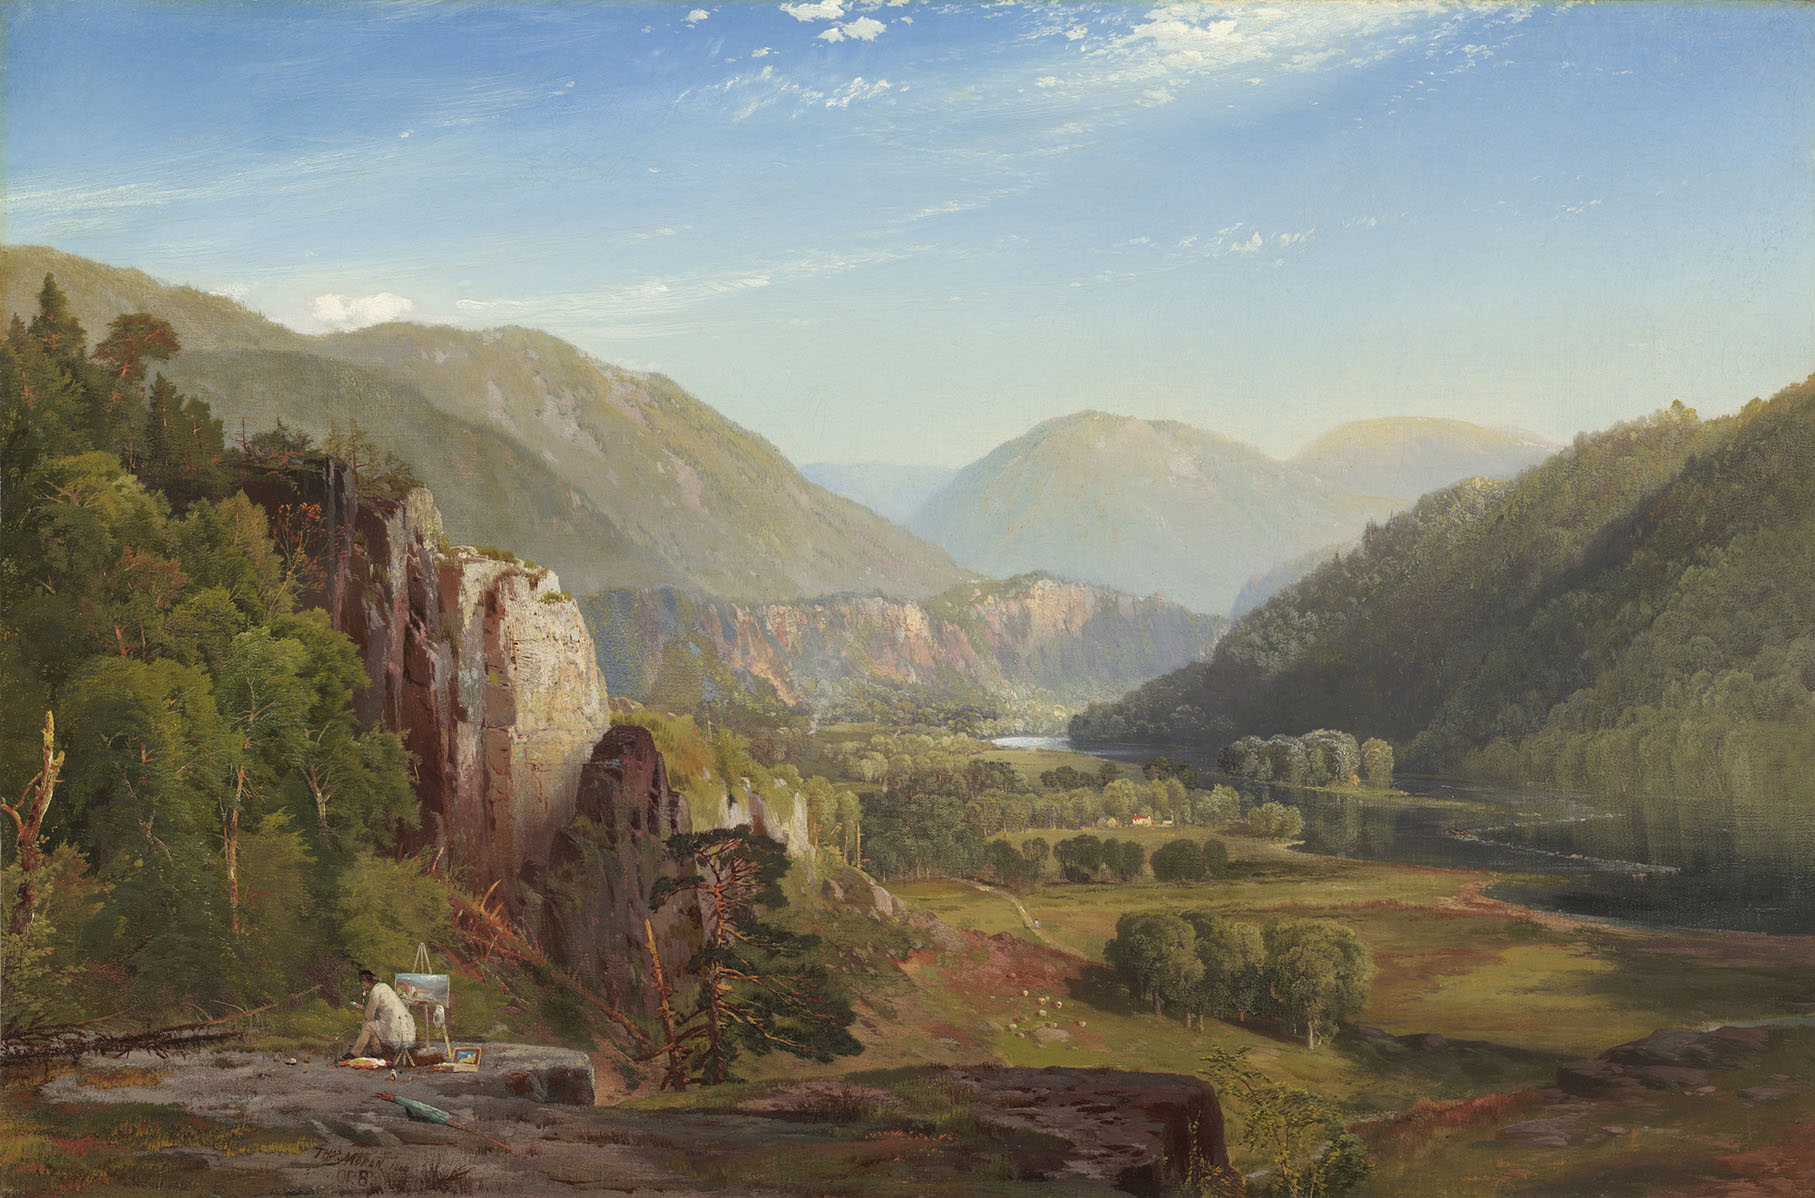 Thomas Moran (American, 1837 - 1926 ), The Juniata, Evening, 1864, oil on canvas, Gift of Max and Heidi Berry and Ann and Mark Kington/The Kington Foundation